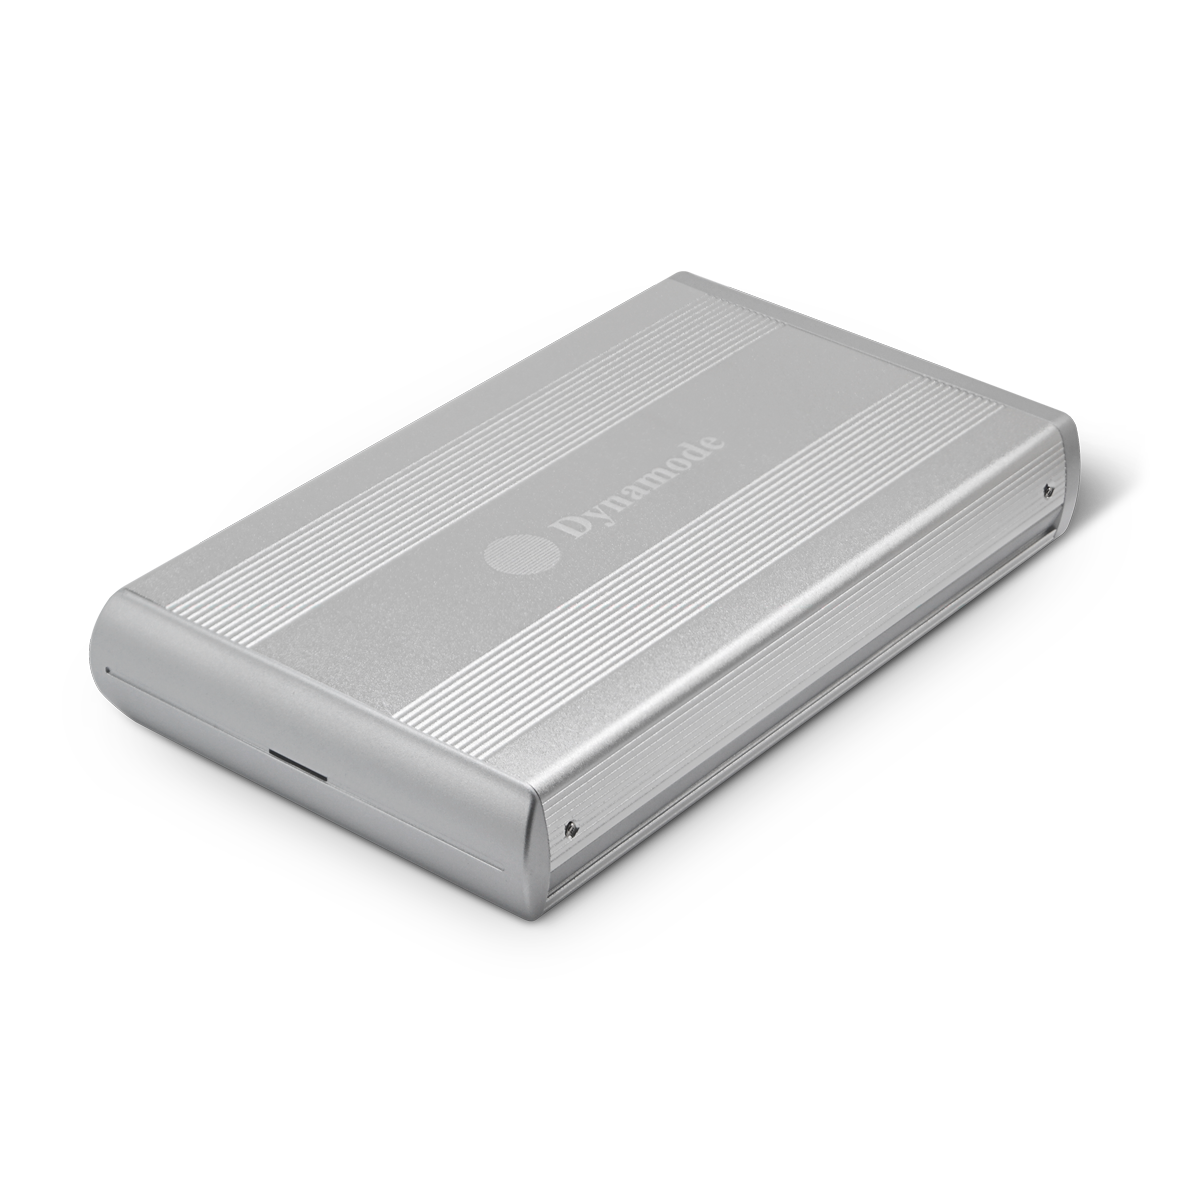 3.5" SATA HDD External Enclosure USB 2.0 (Silver) - Netbit UK